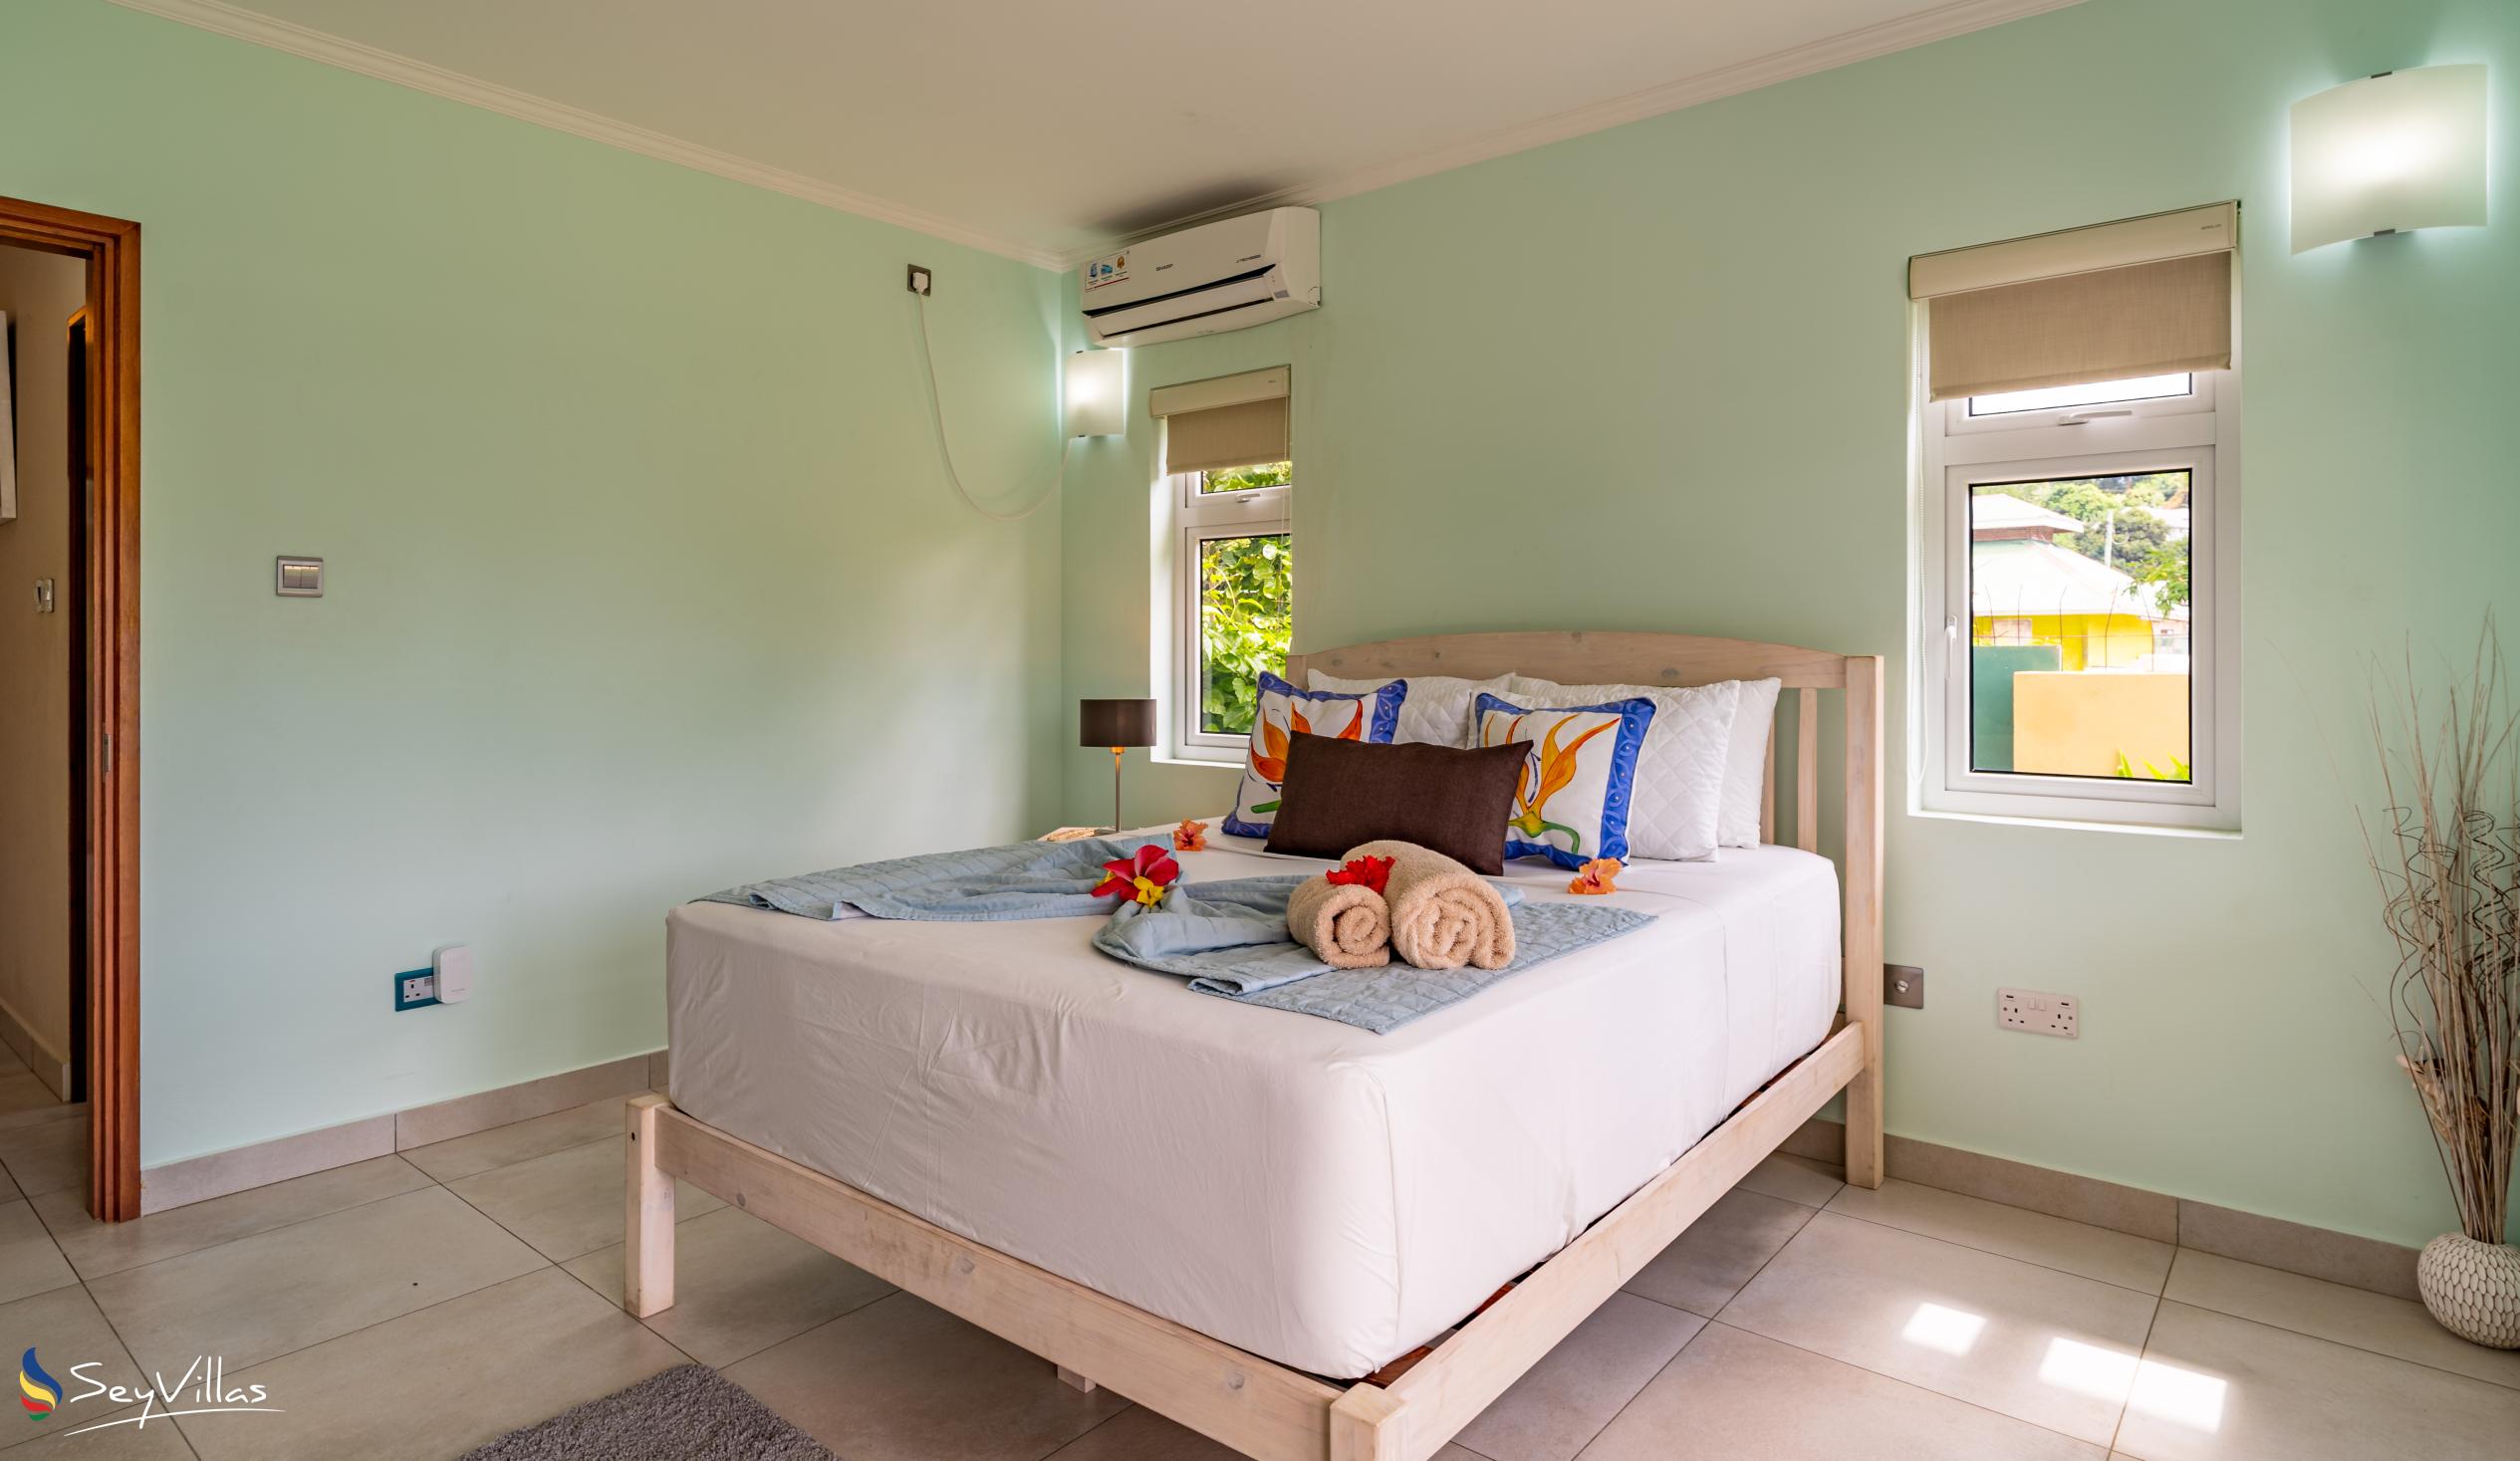 Photo 79: Mae Waterfront Apartments - 2-Bedroom Apartment - Mahé (Seychelles)